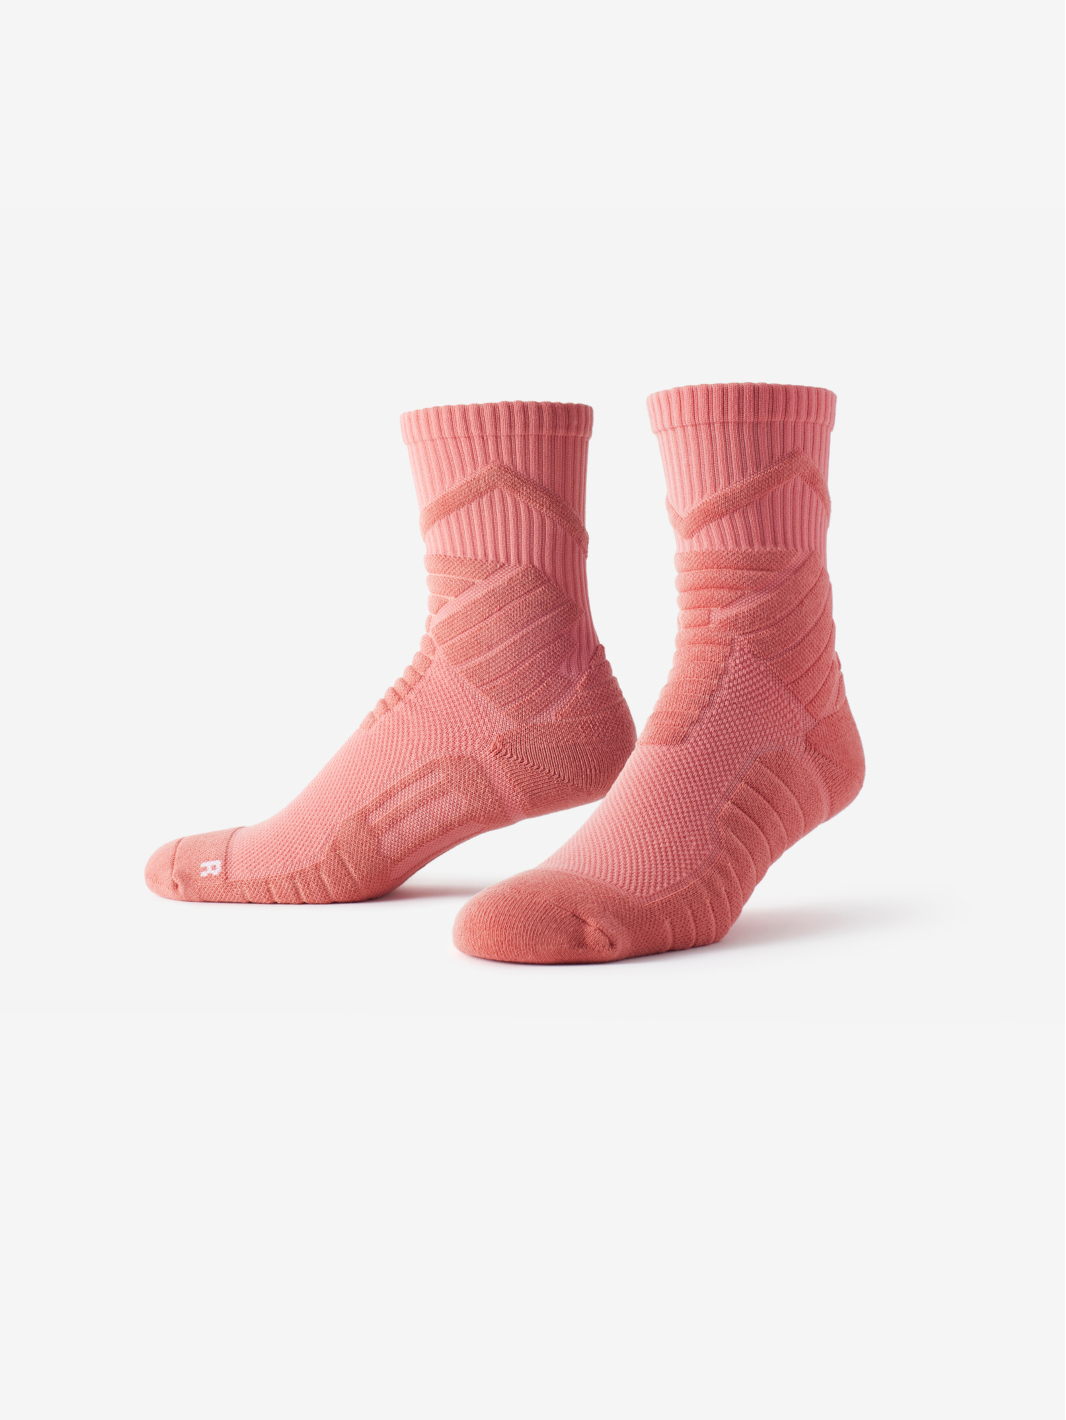 SMRTFT | Cashmere Socks | Best Mens Cashmere Socks | Athletic Ankle Socks